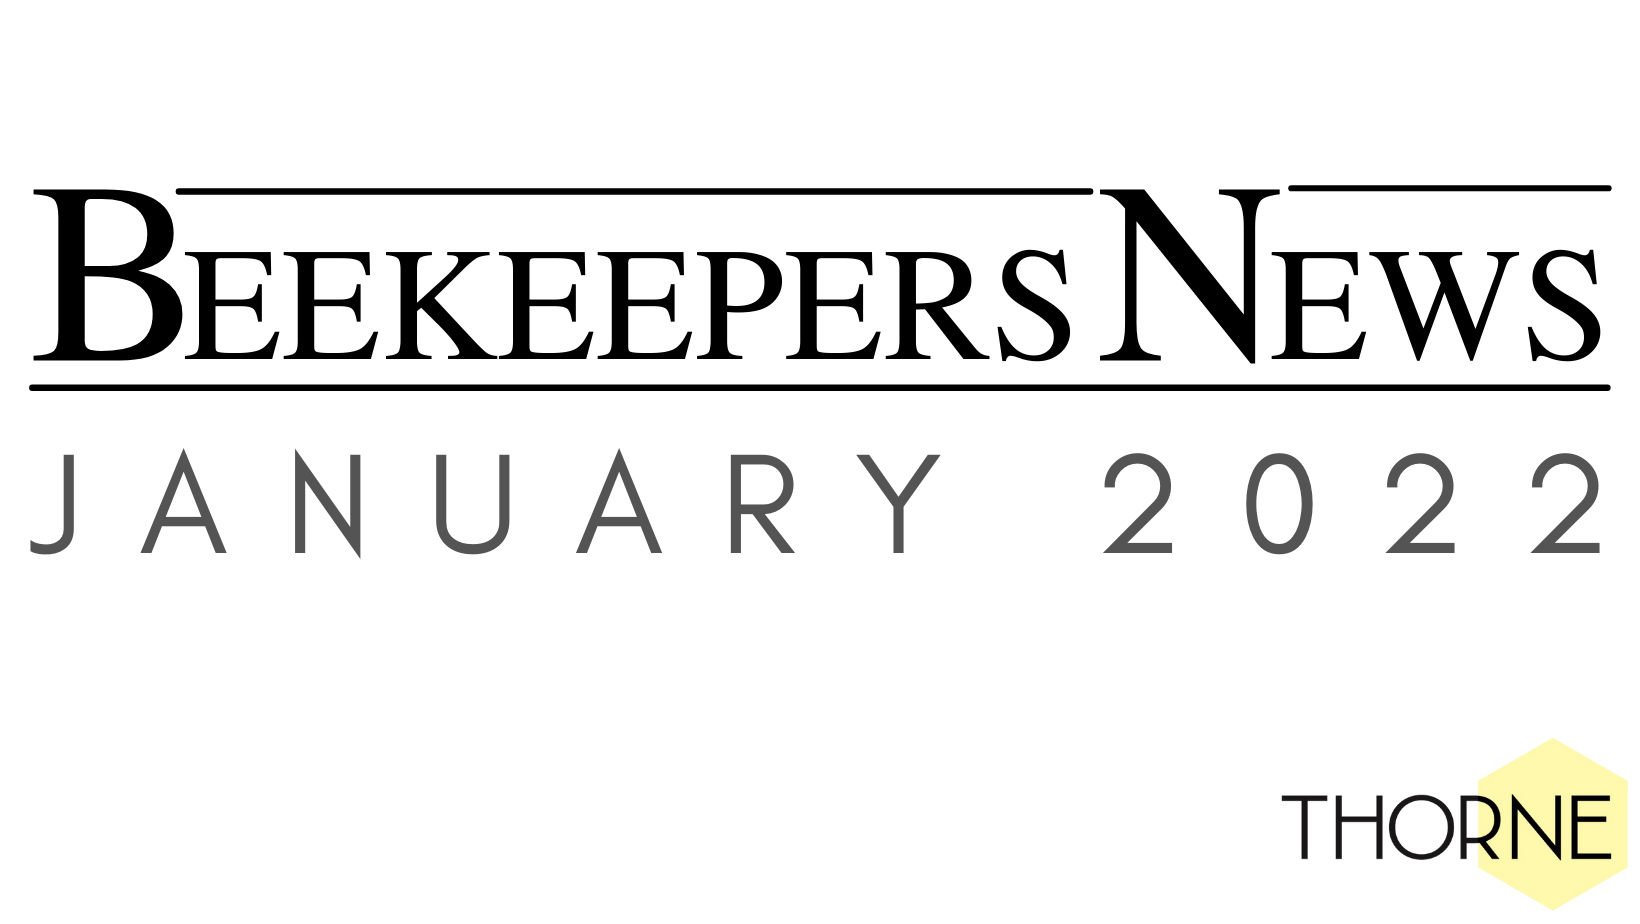 Beekeepers News - January 2022 - Issue 64